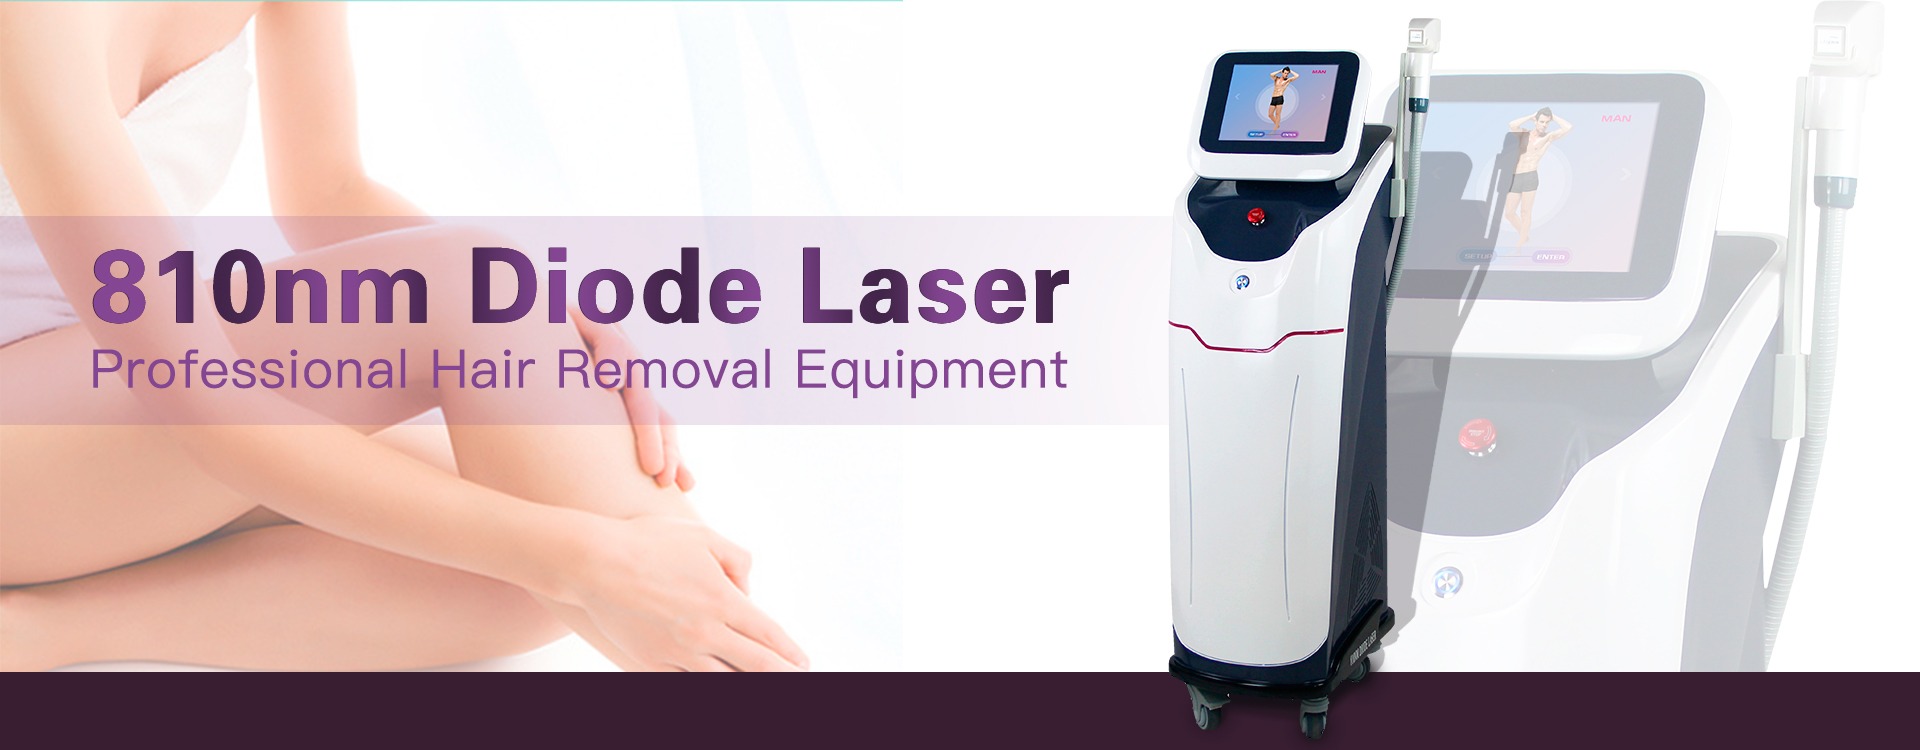 Diode Laser Hair Removal Machine-4.jpg